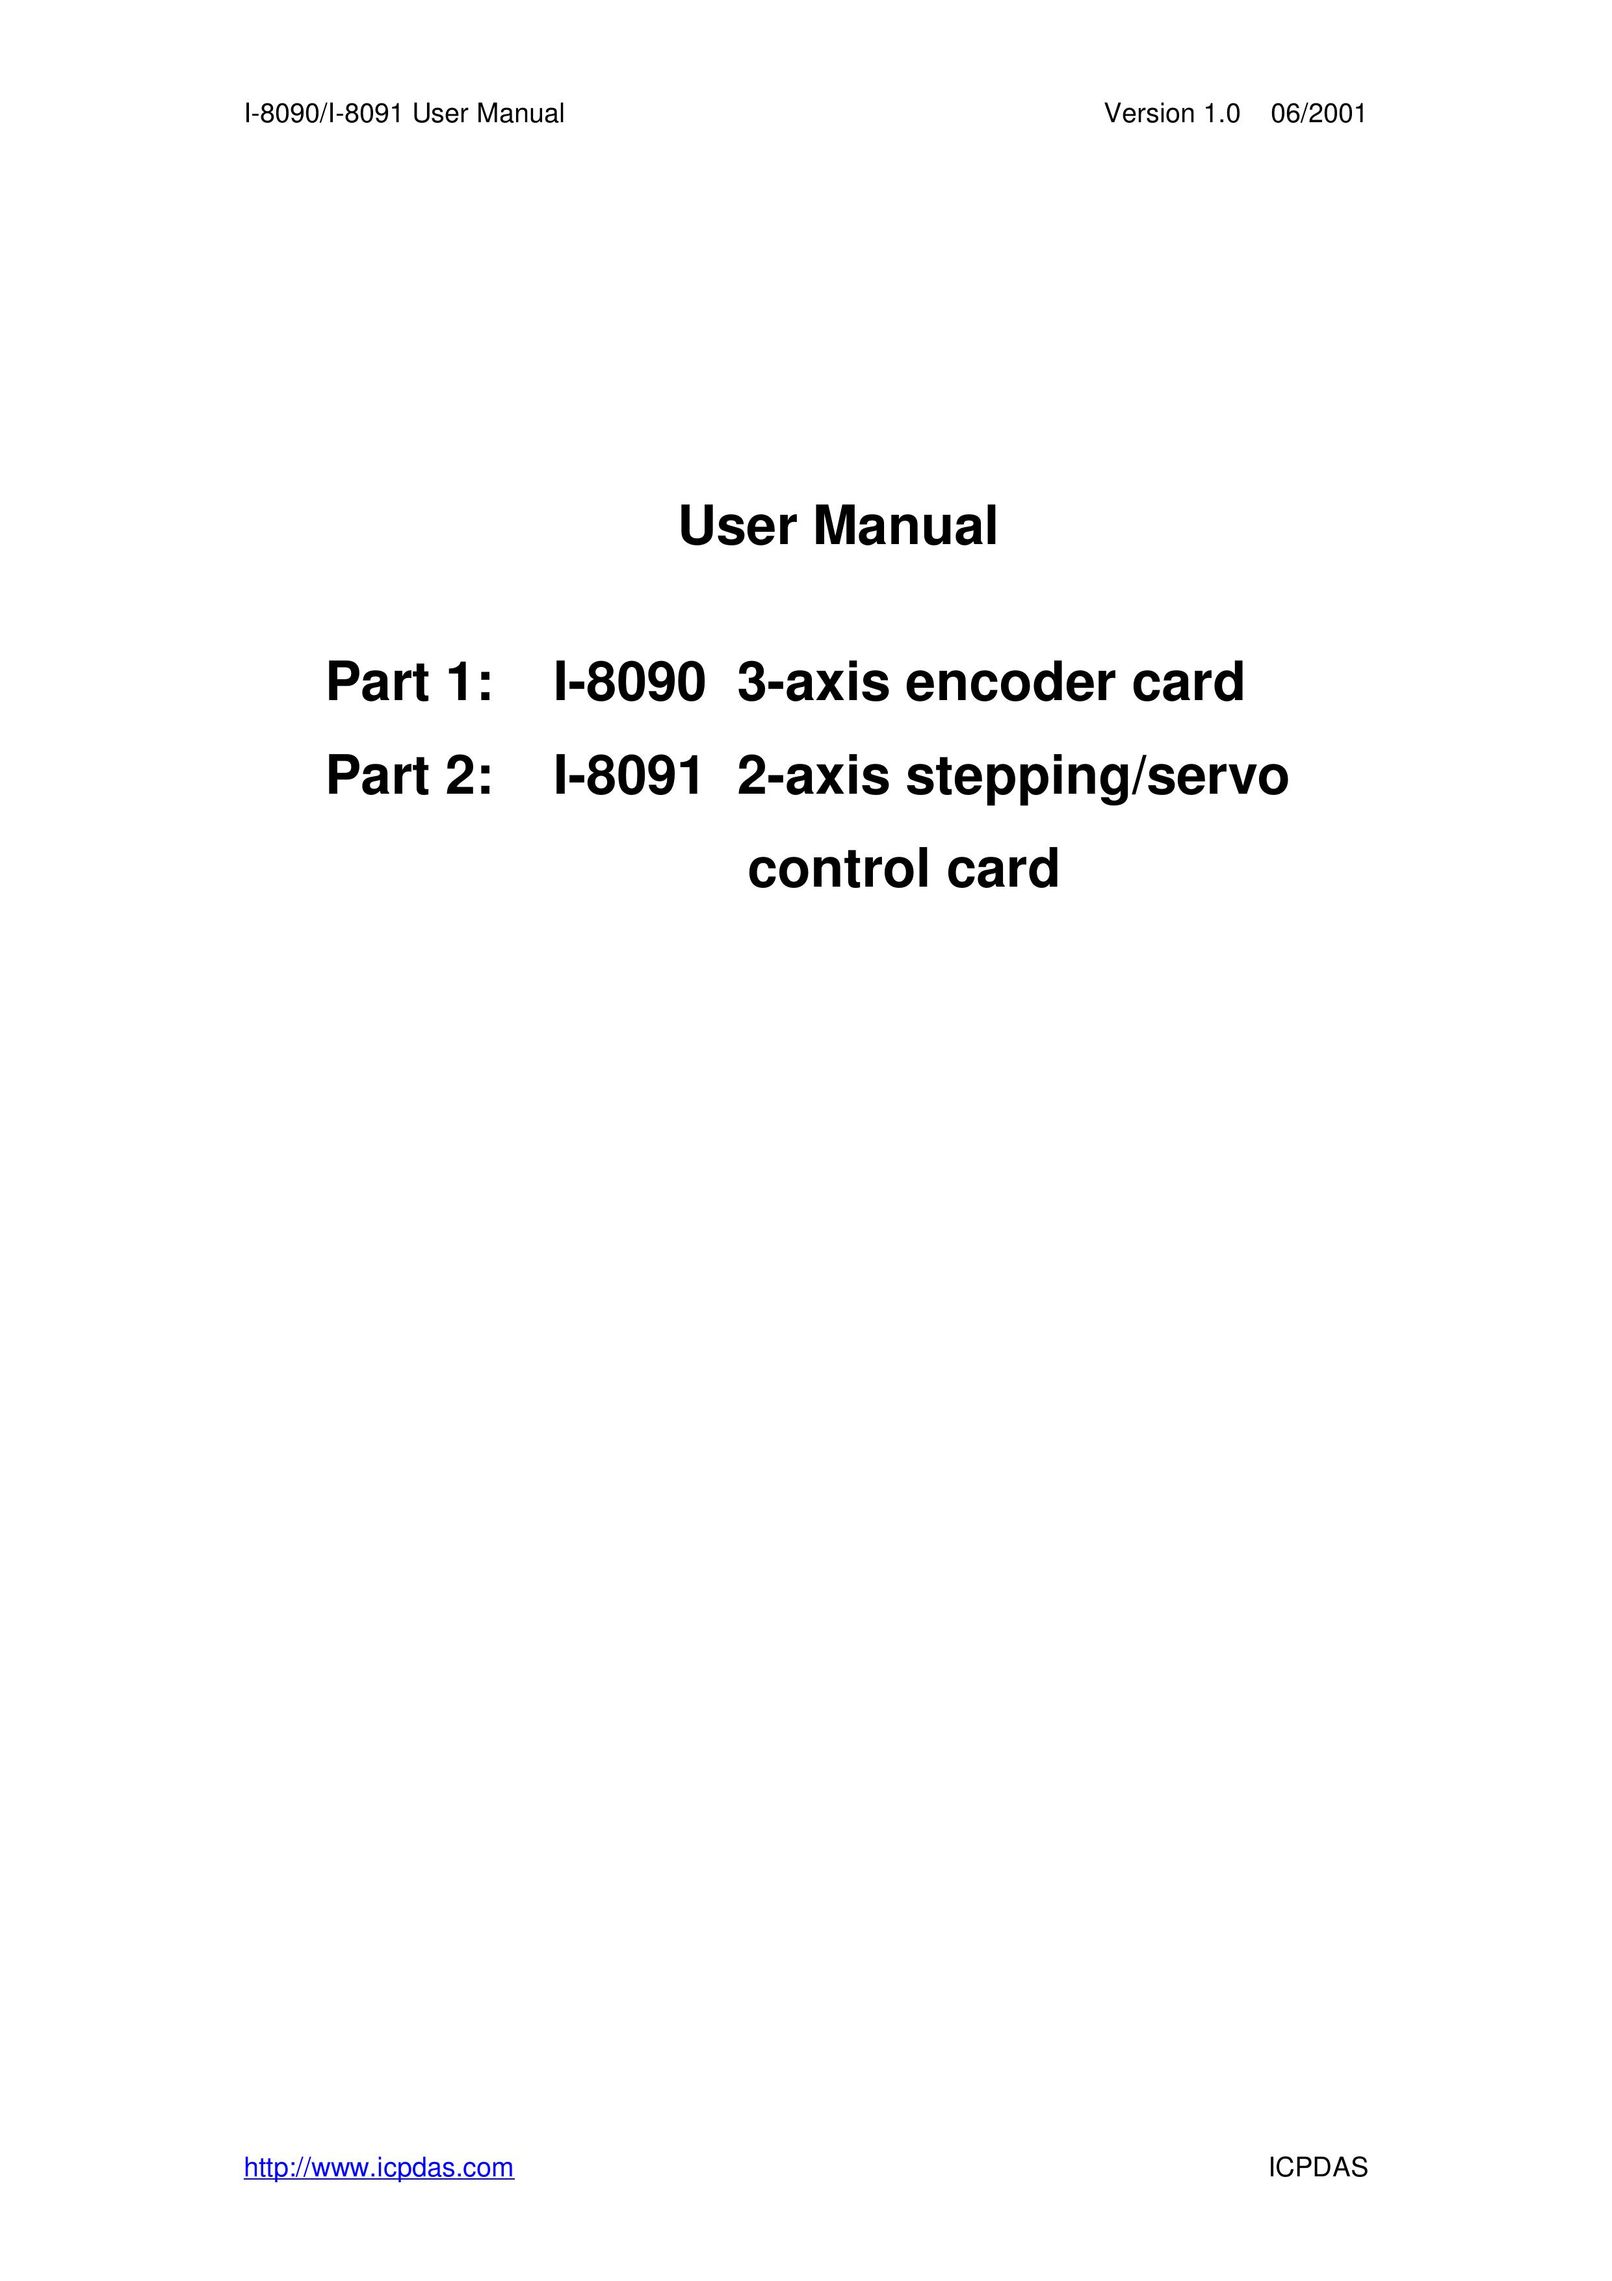 ICP DAS USA I-8091 2-axis stepping/servo Computer Hardware User Manual